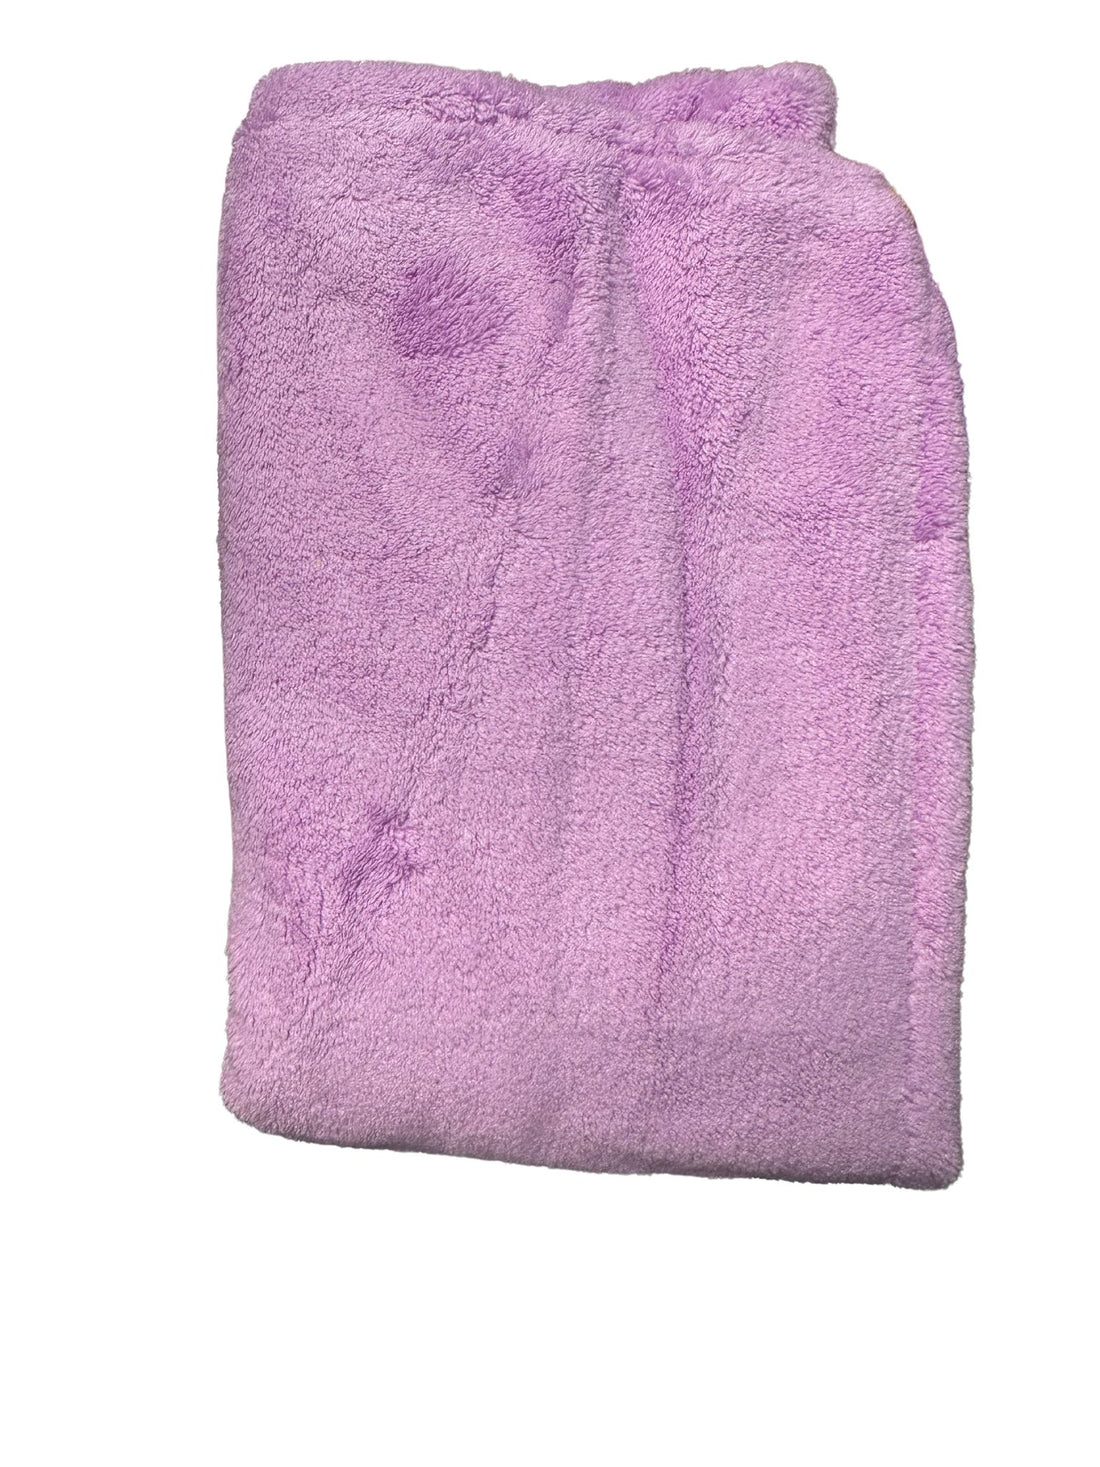 LurellaFam Dry Hair Towel